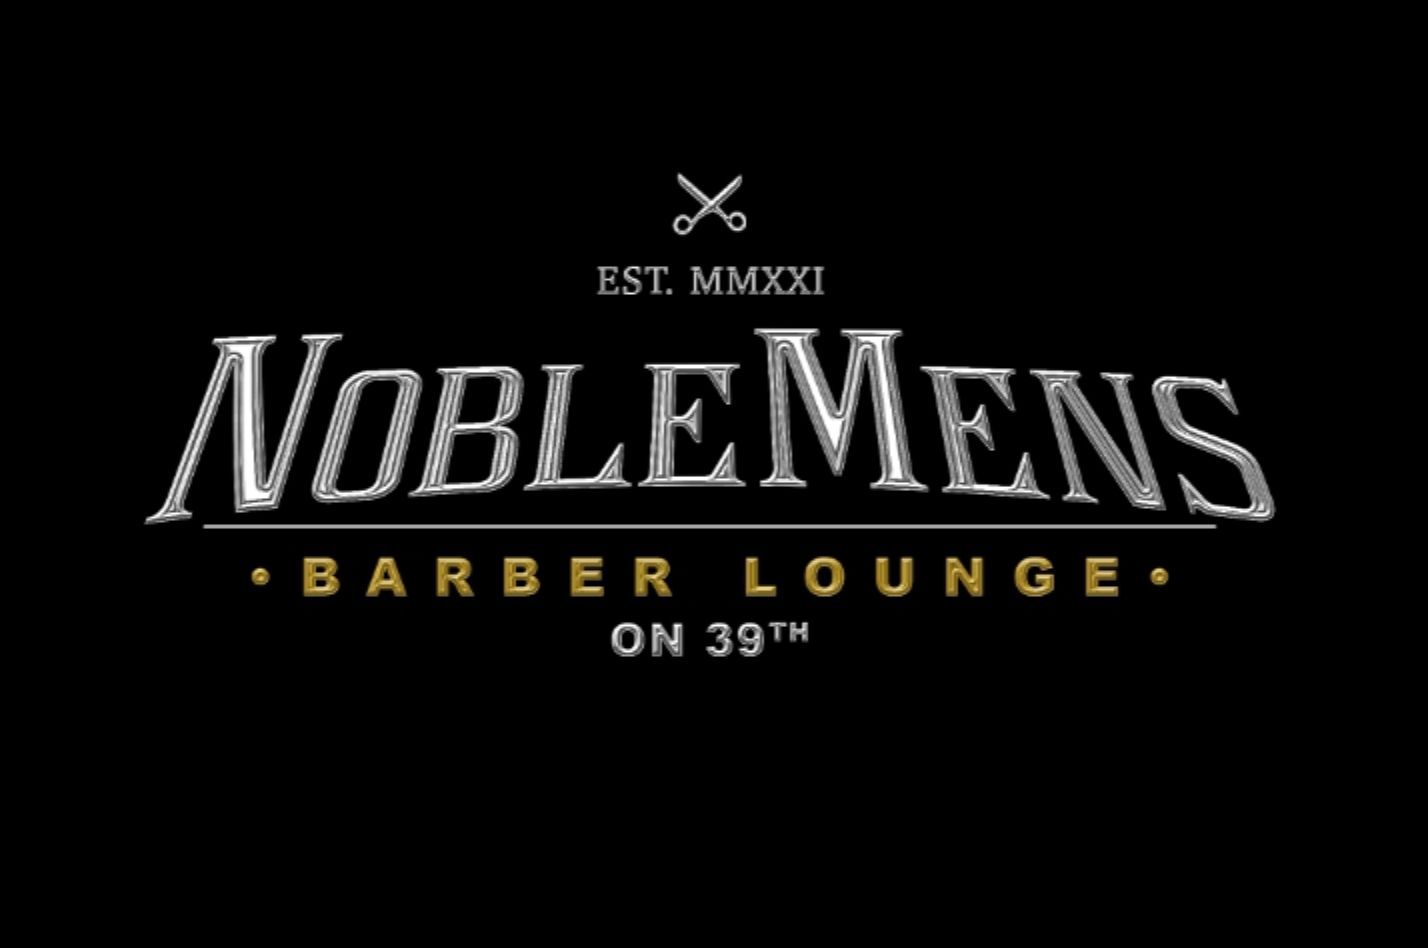 General 1 — The Nobleman Barbershop